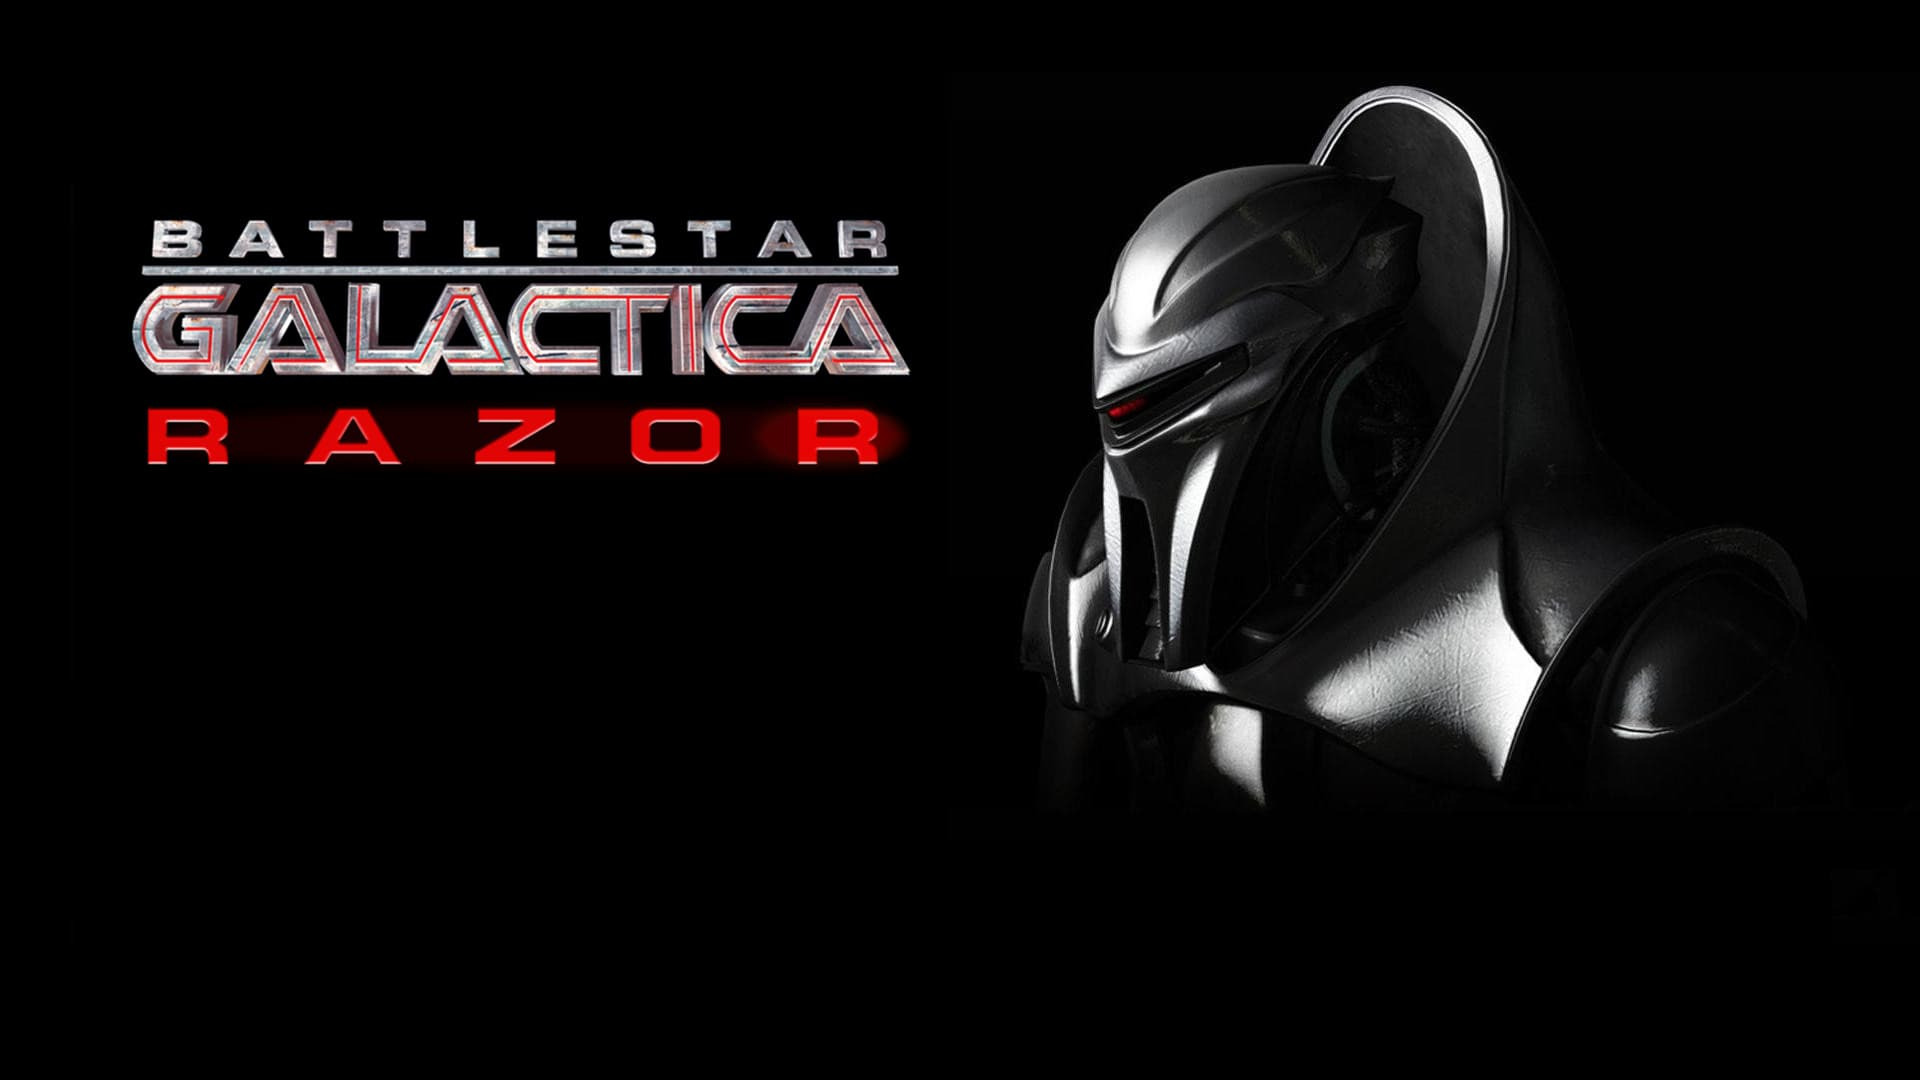 Show Battlestar Galactica: Razor Flashbacks